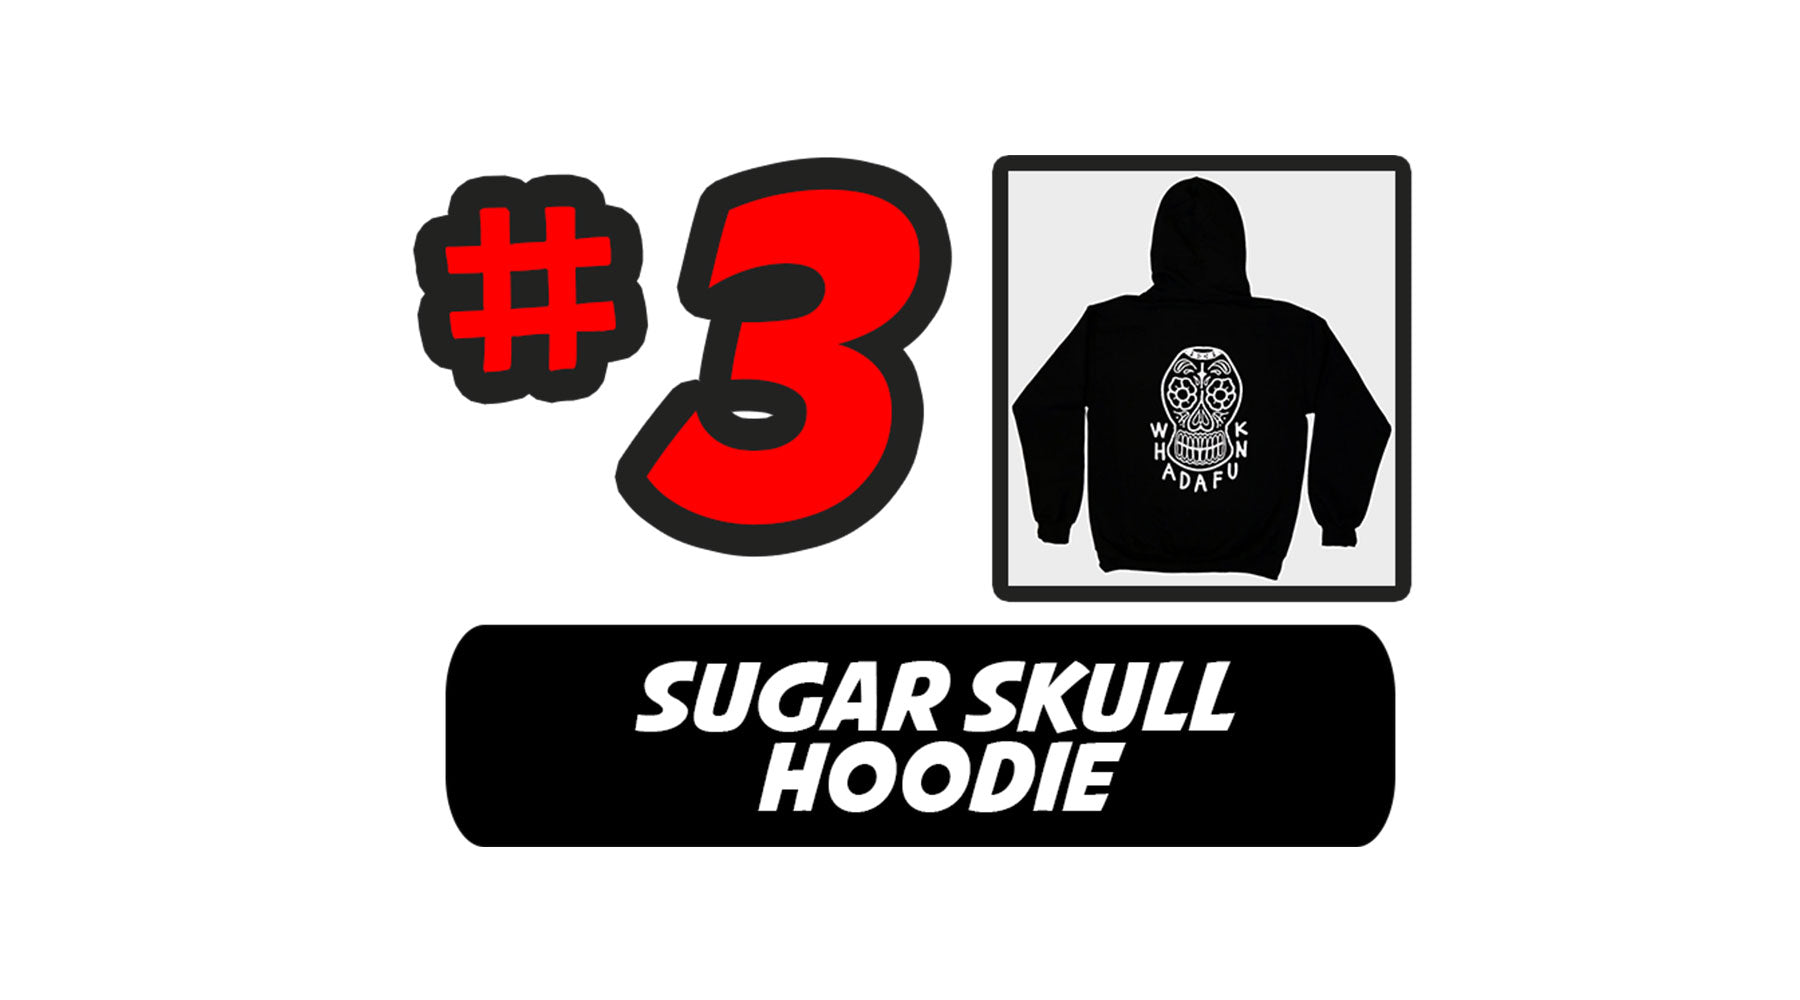 whadafunk sugar skull hoodie